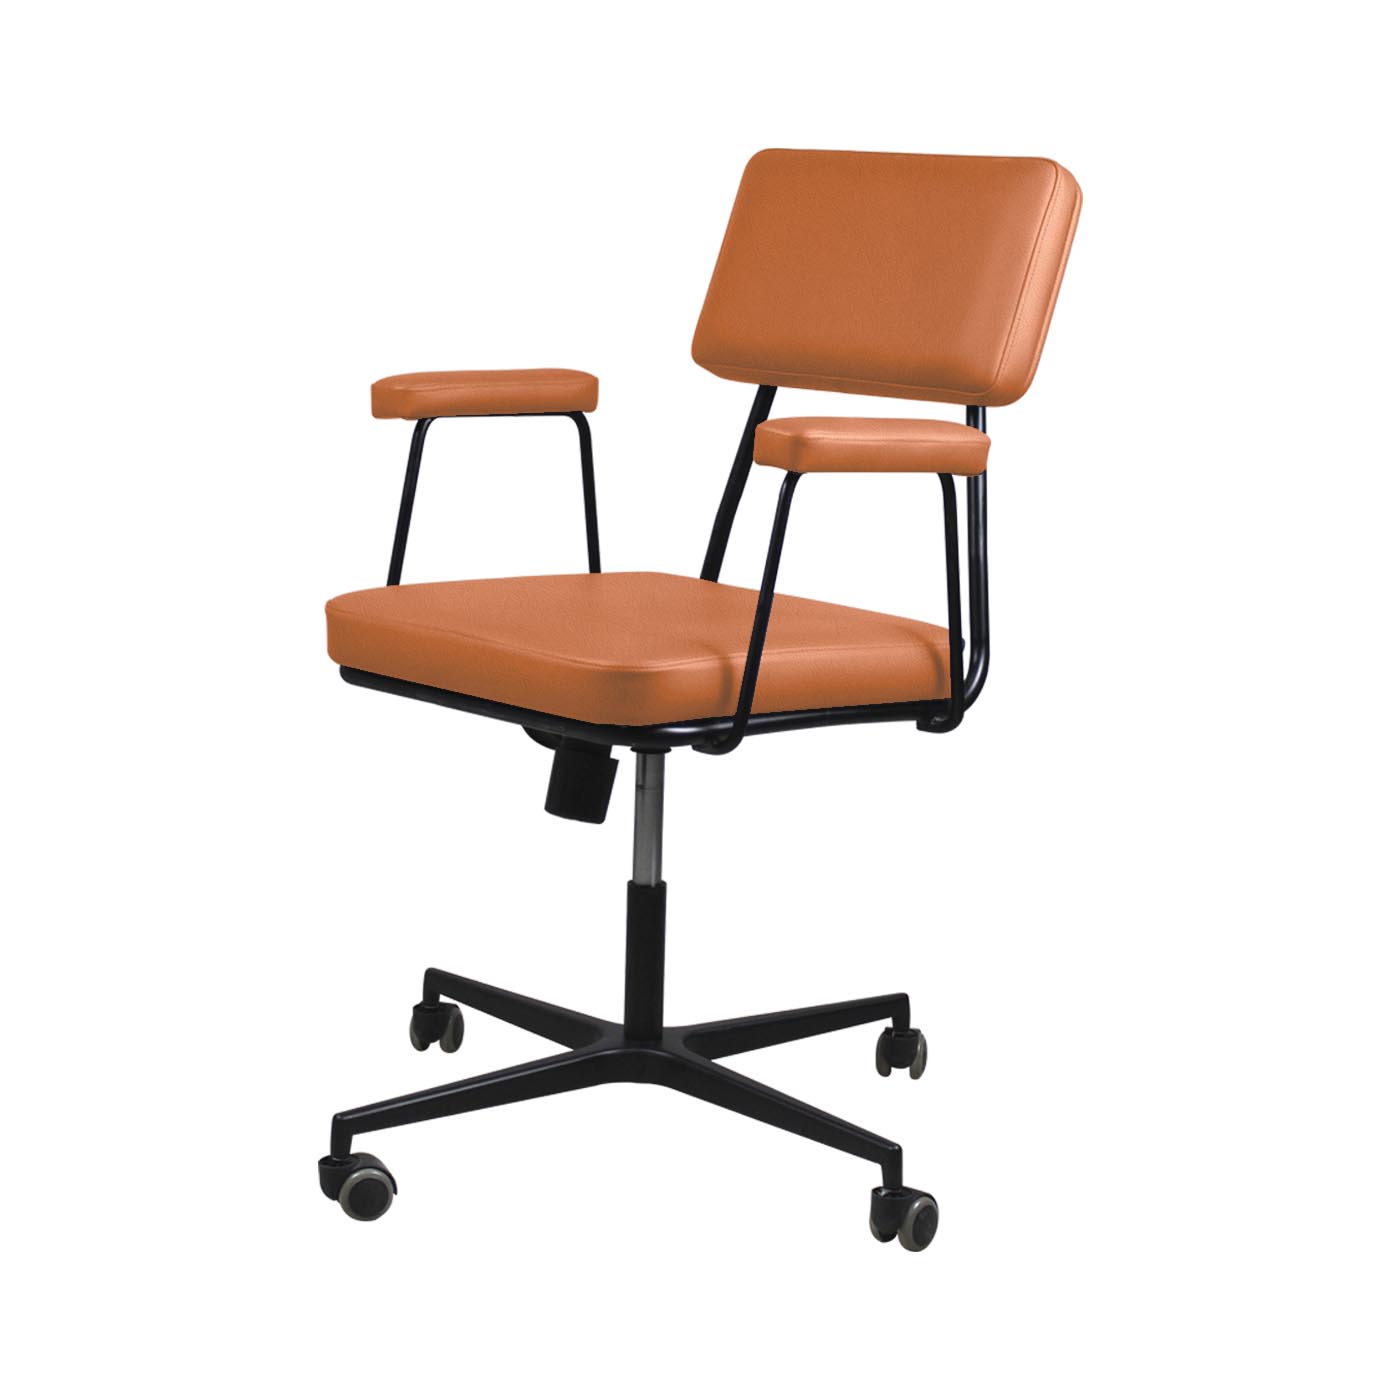 Noblitt Orange Work Chair